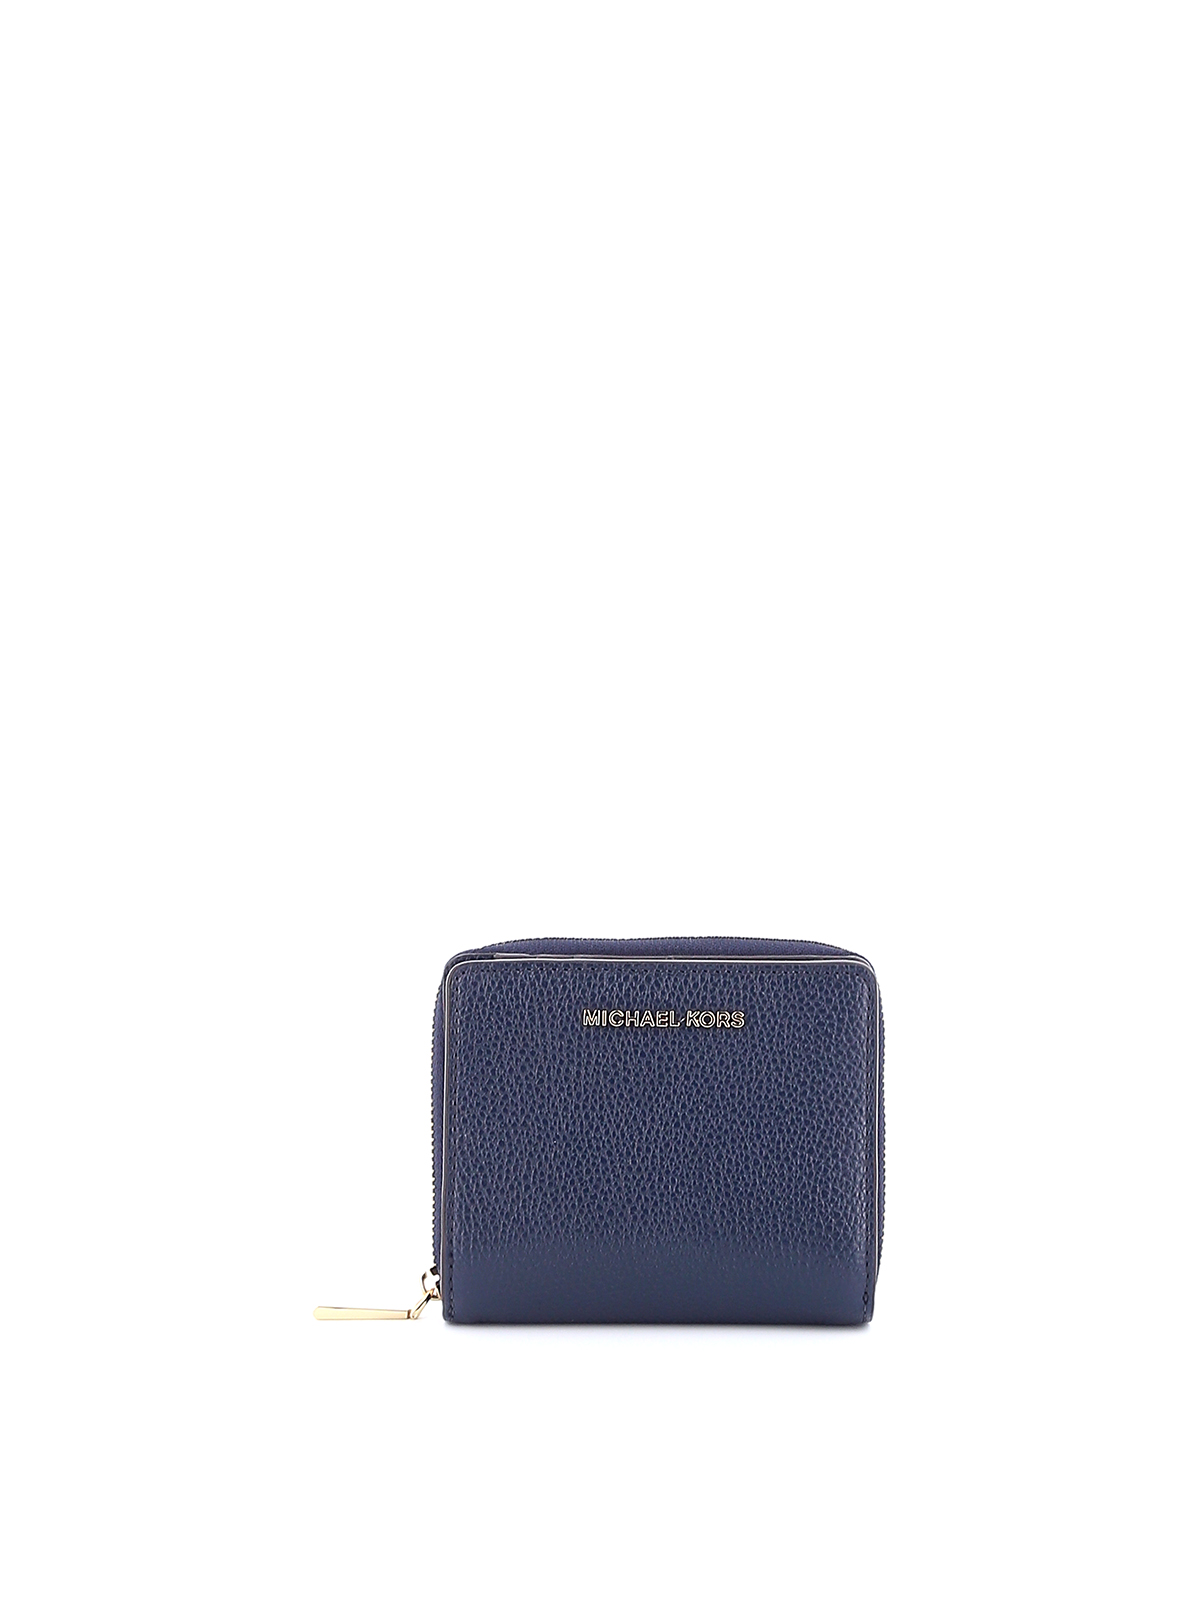 Wallets & purses Michael Kors - Jet Set medium blue snap wallet -  34F9GJ6Z8L406